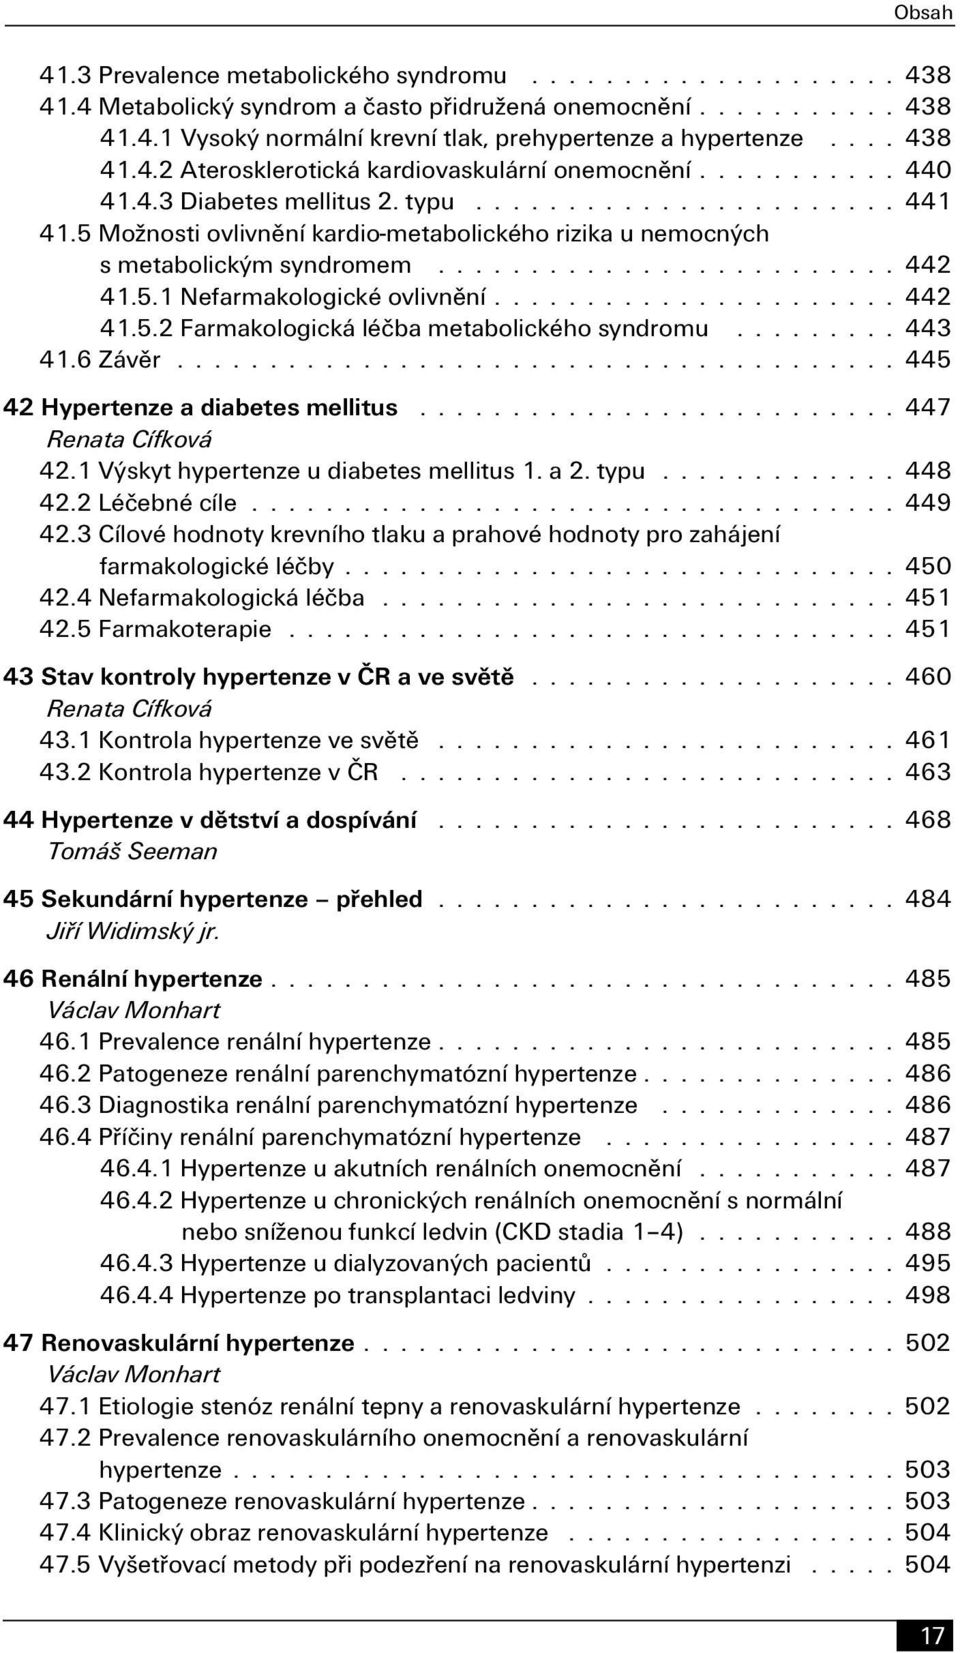 6 Závěr 445 42 Hypertenze a diabetes mellitus 447 Renata Cífková 42.1 Výskyt hypertenze u diabetes mellitus 1. a 2. typu 448 42.2 Léčebné cíle 449 42.